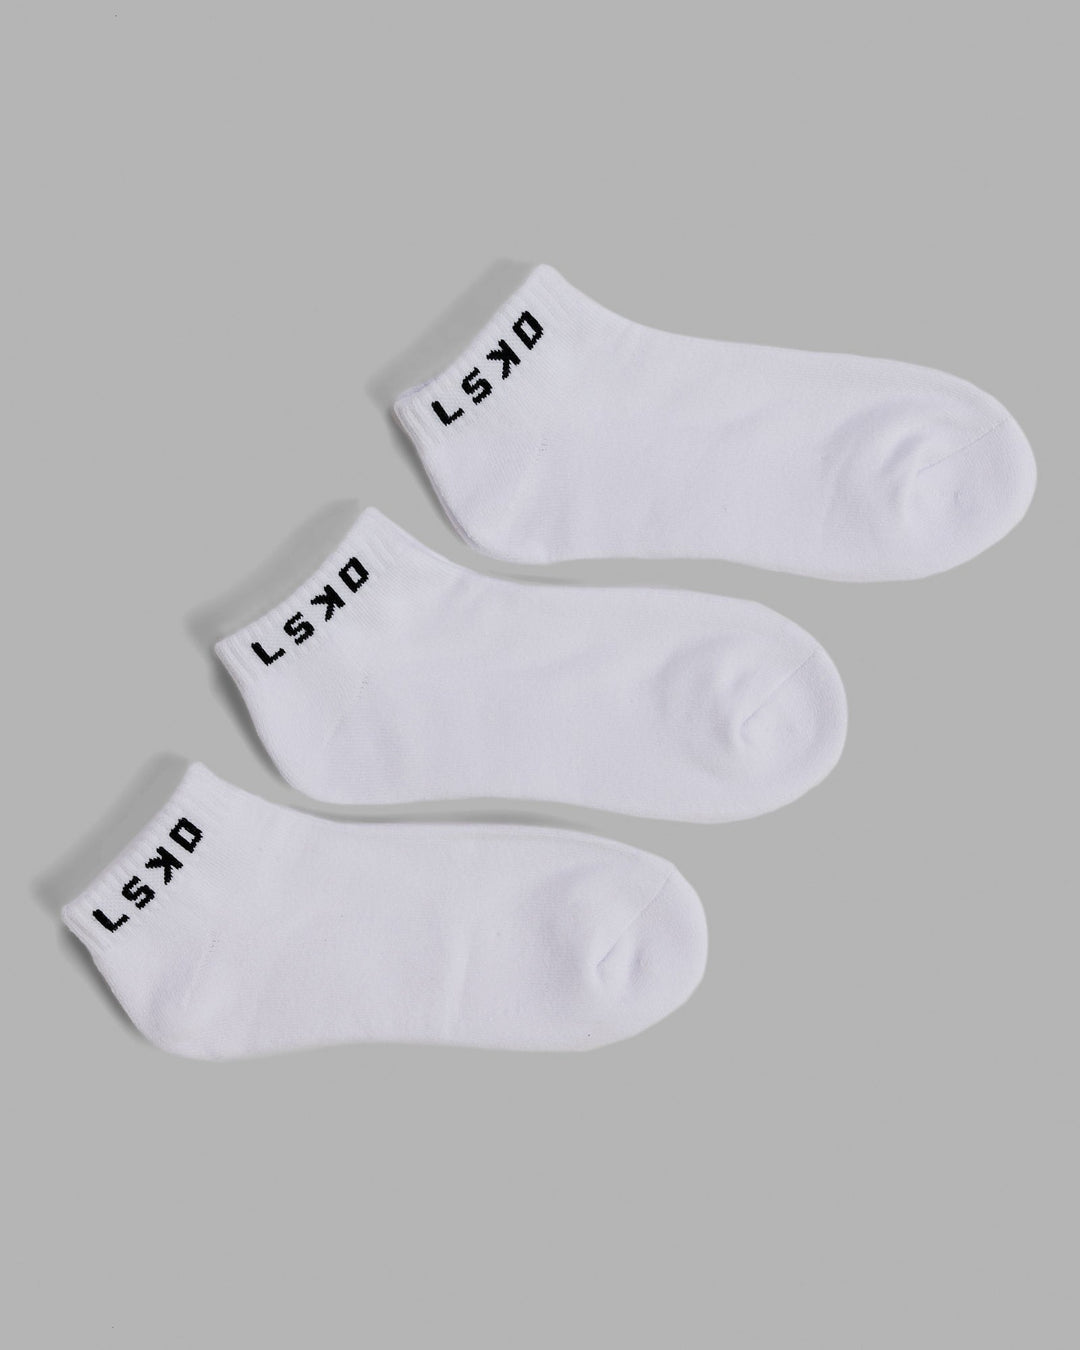 Daily 3 Pack Ankle Socks - White